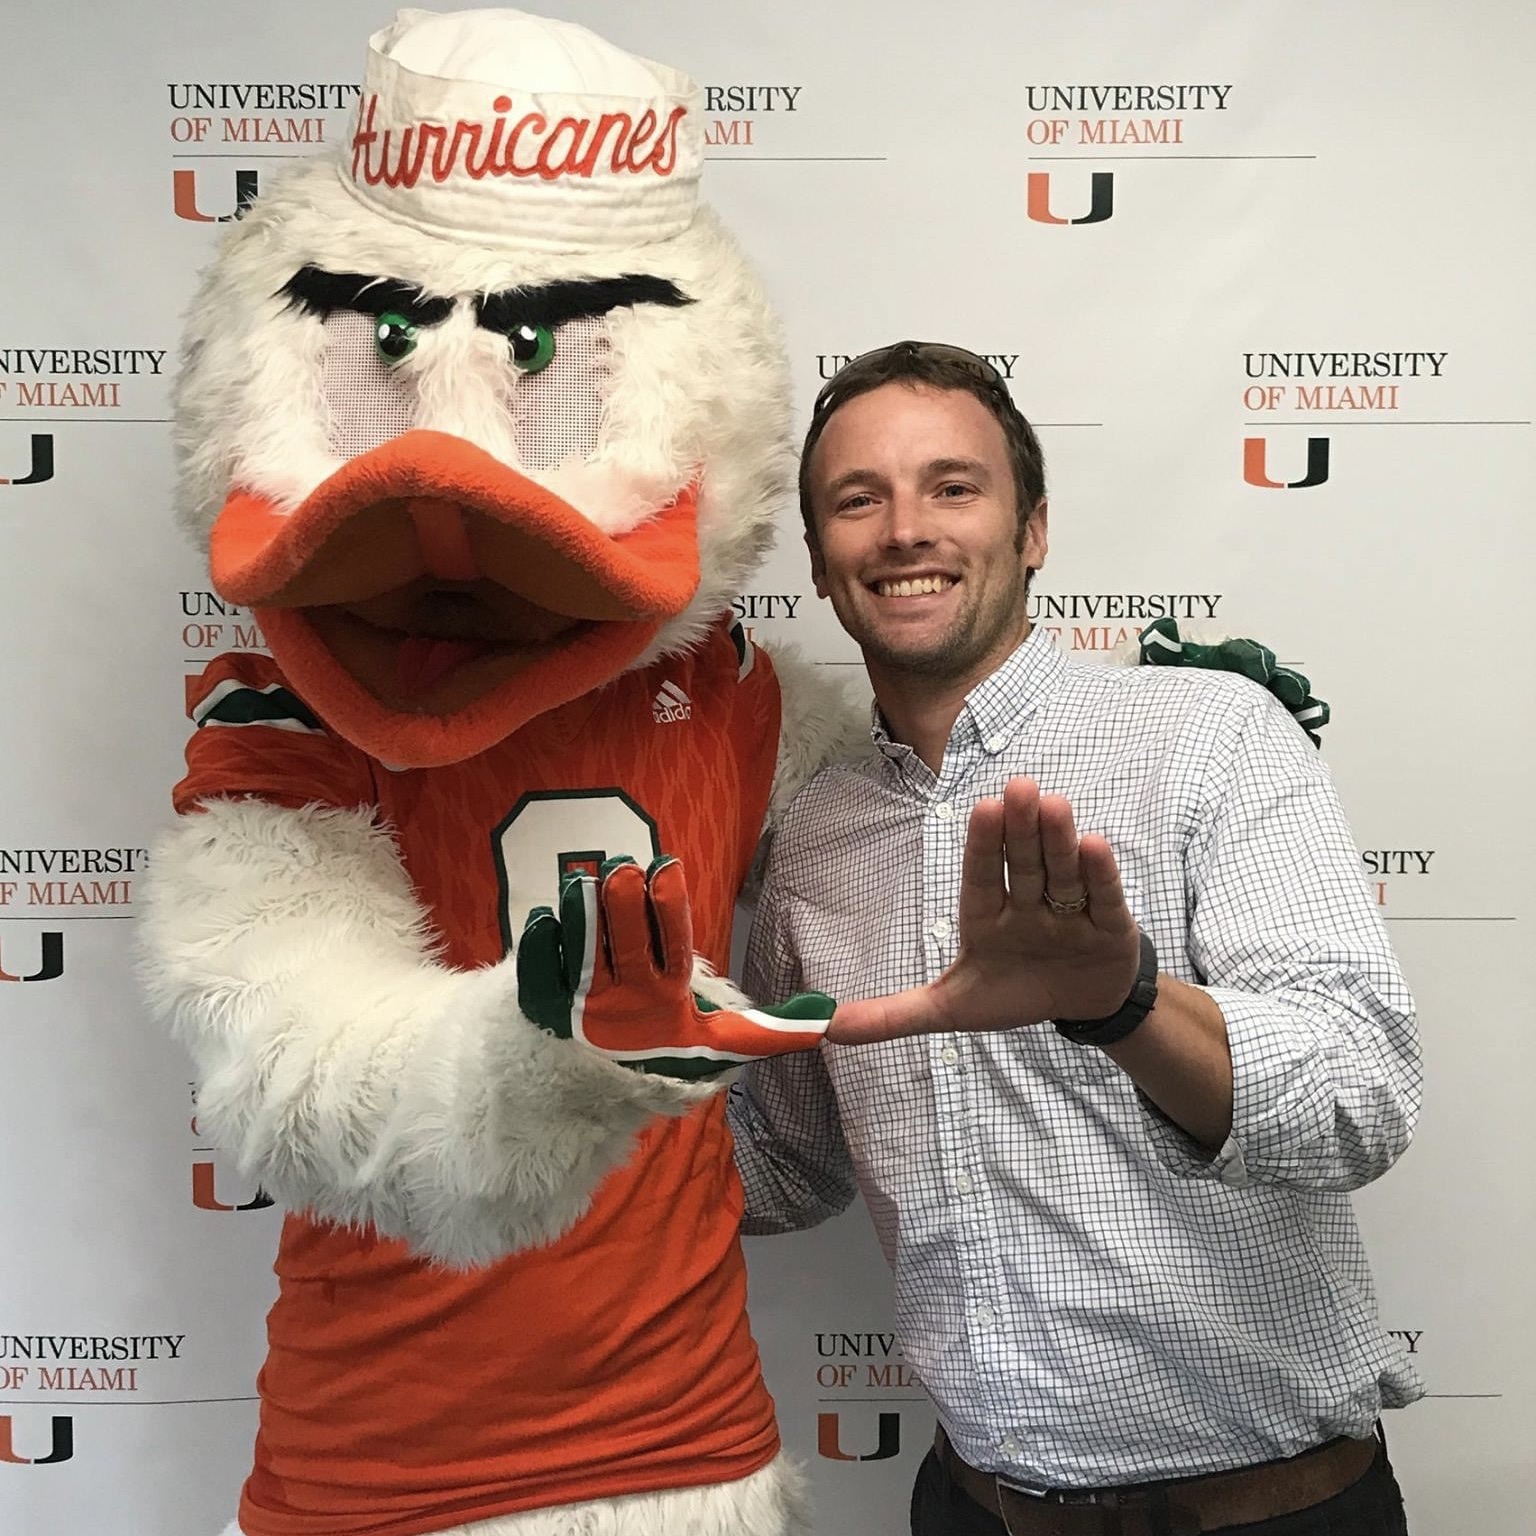 Celebrating the Miami Hurricanes with Sebastian the Ibis, the mascot for the University of Miami.